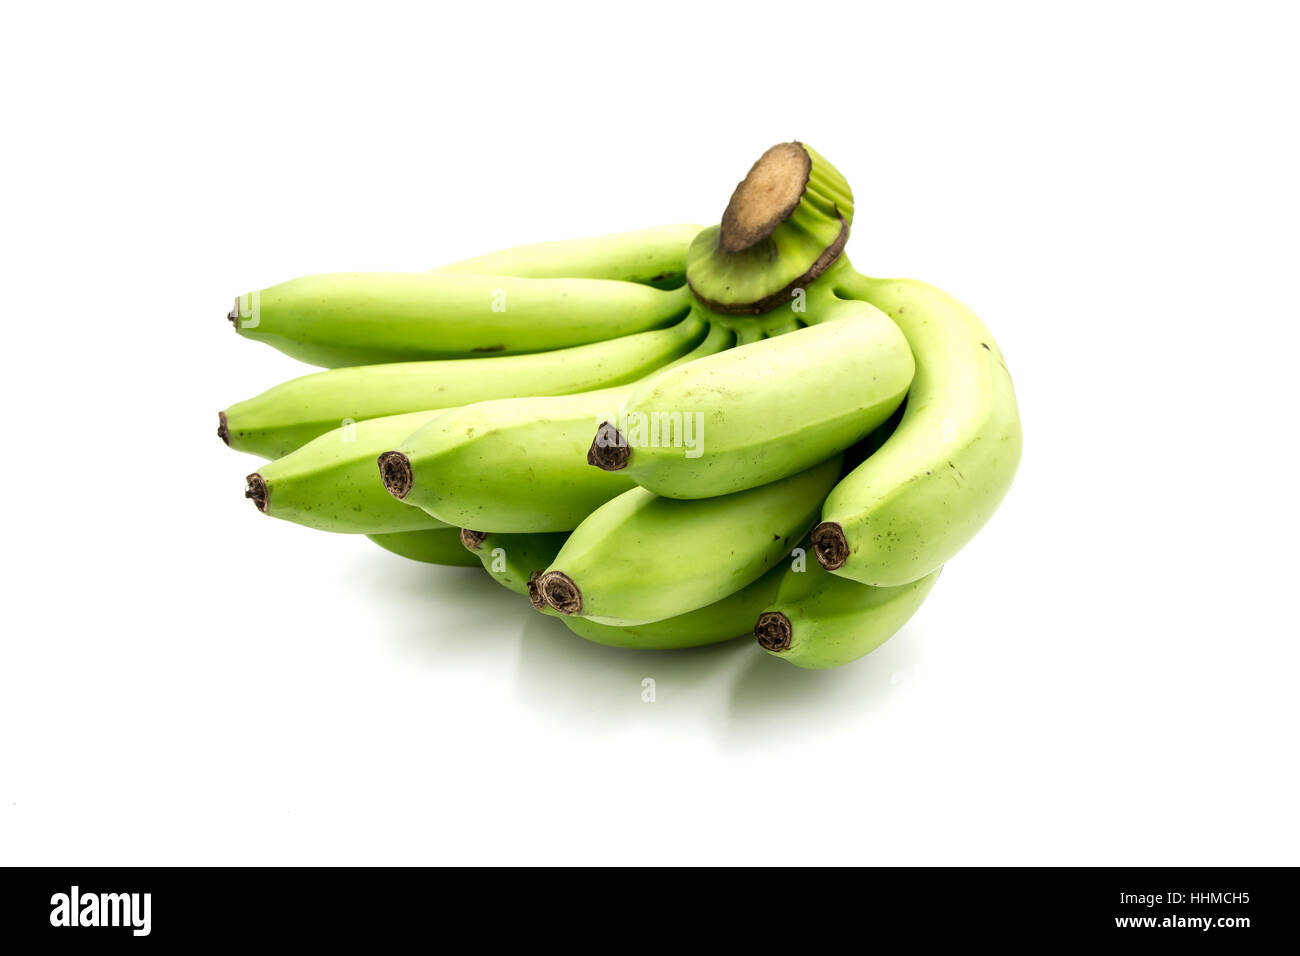 Big fresche banane verdi isolati su sfondo bianco Foto Stock